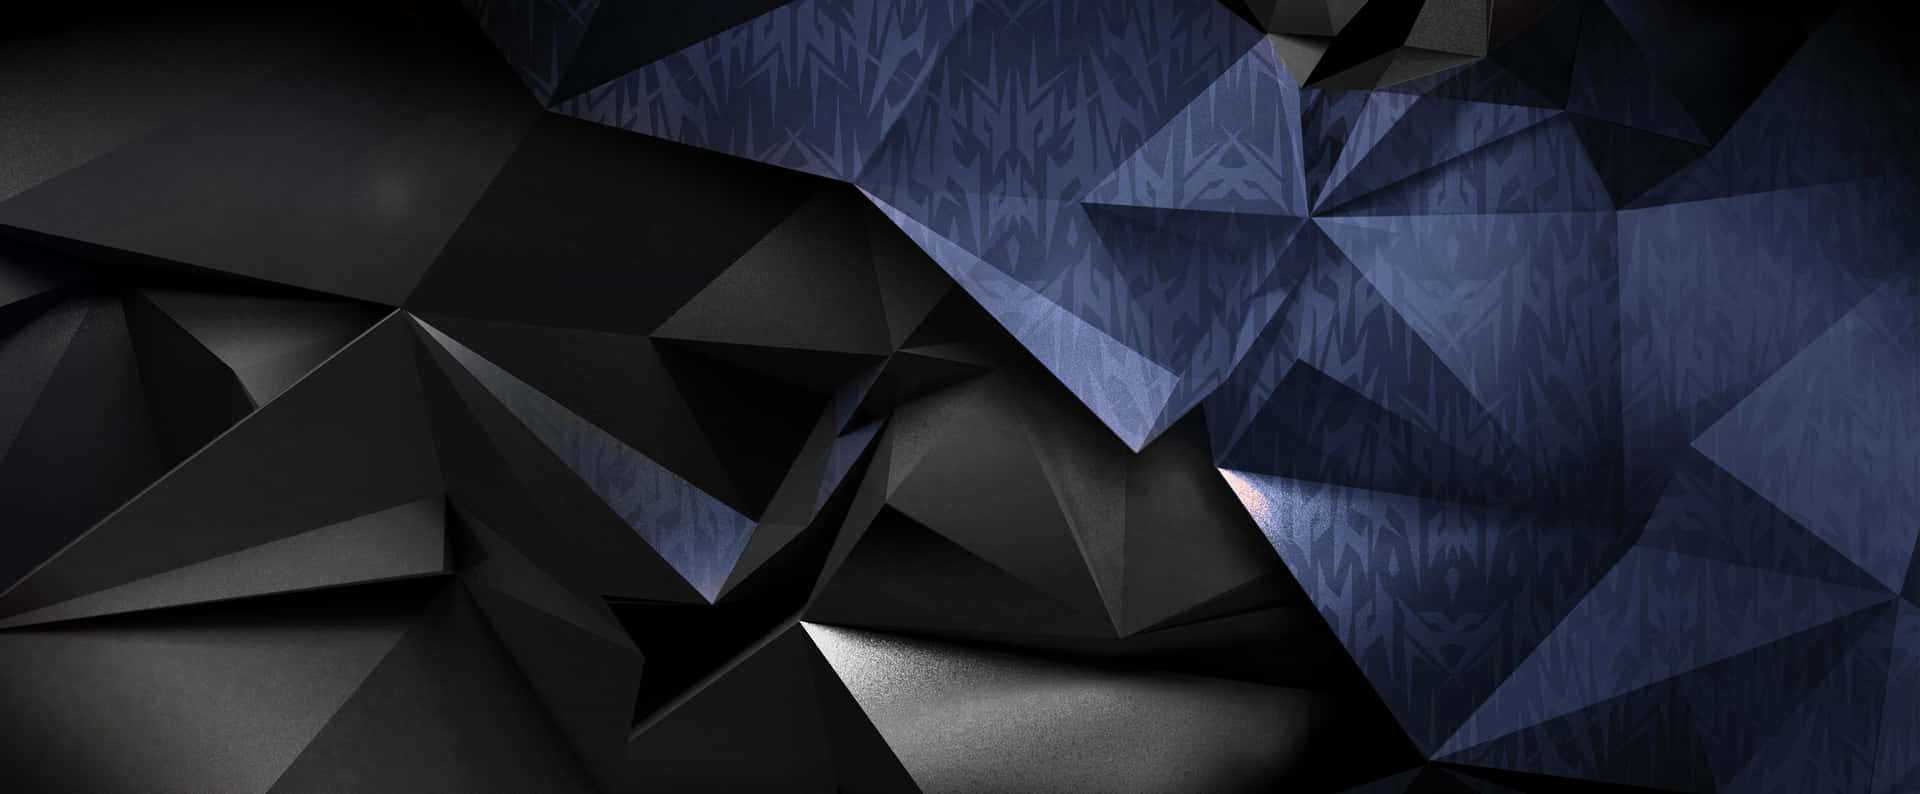 Enigmatic Energy - Dark Abstract Artwork Wallpaper